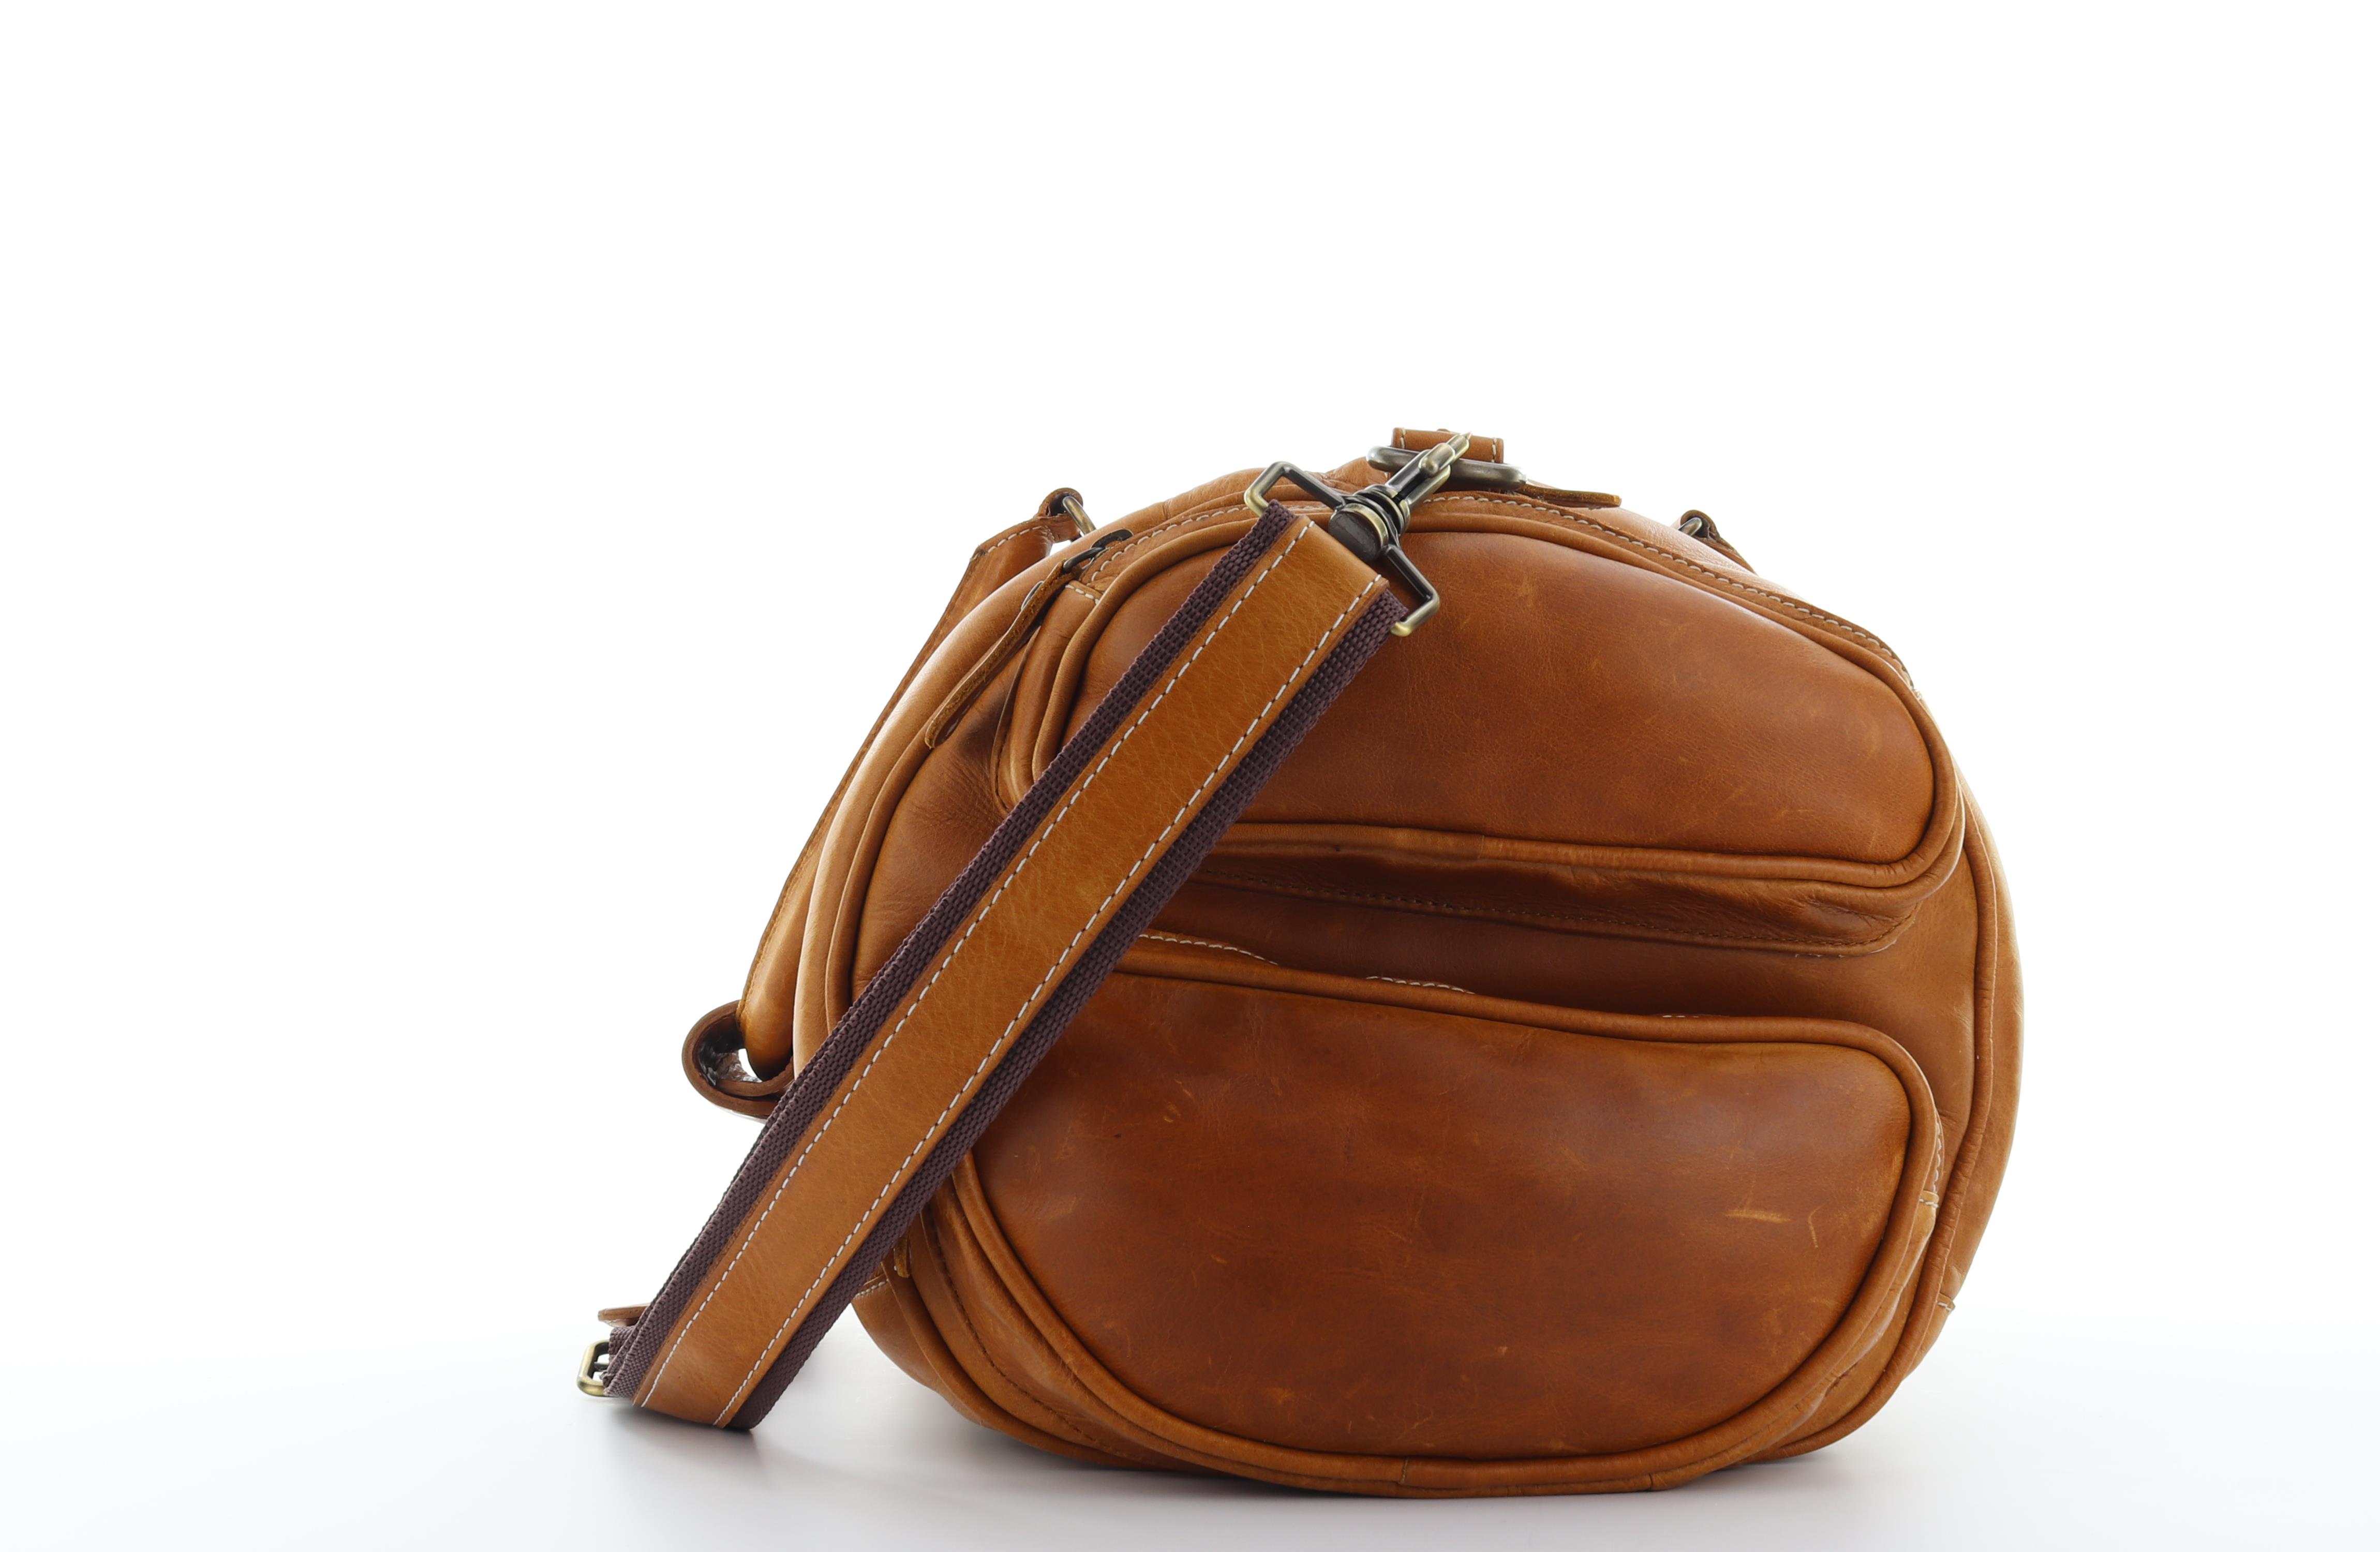 Duncan Leather Travel Bag - Brown